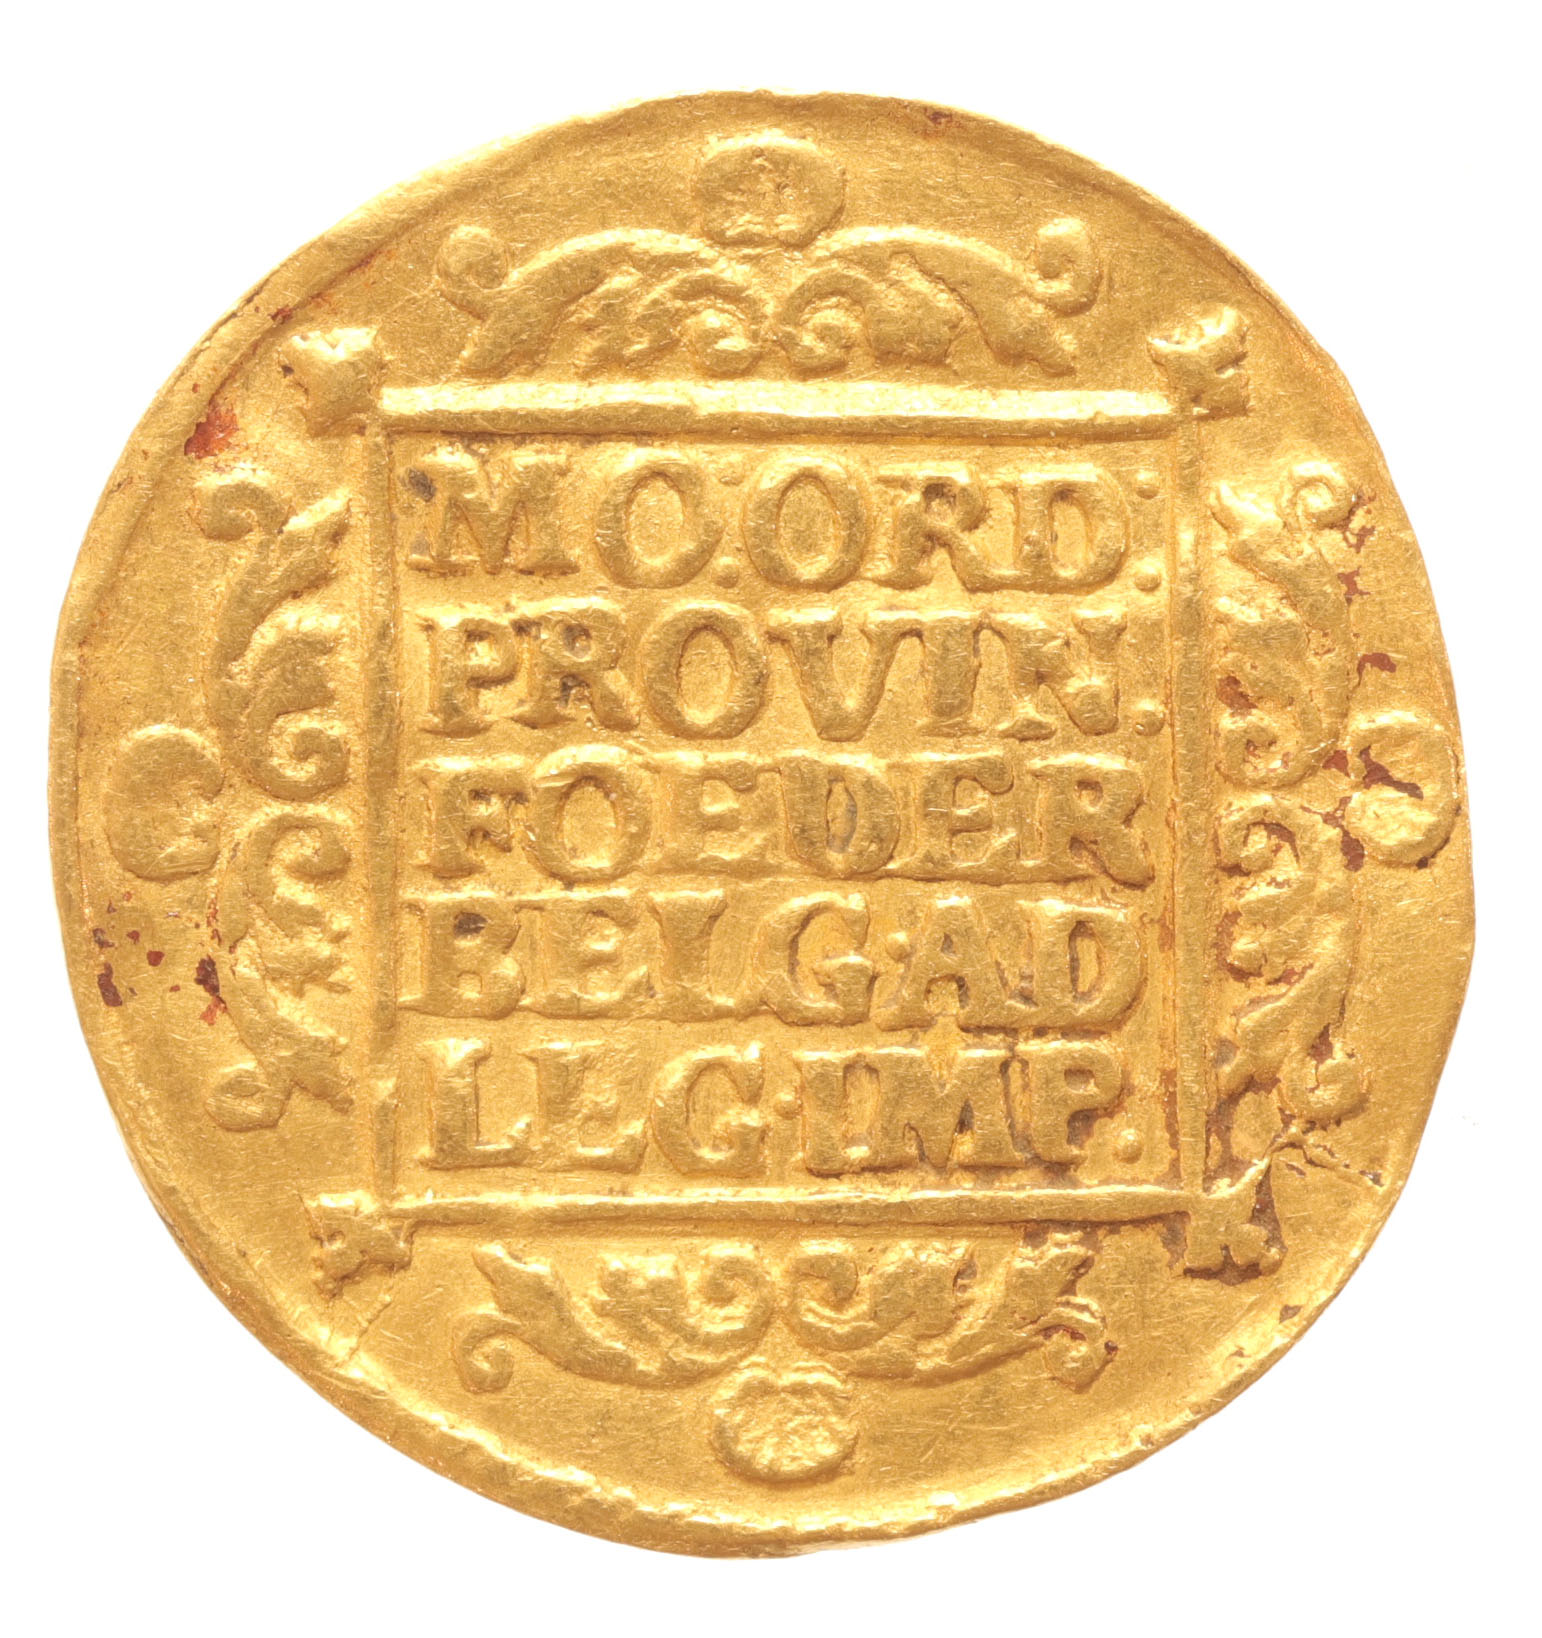 Holland Nederlandse dukaat goud 1737